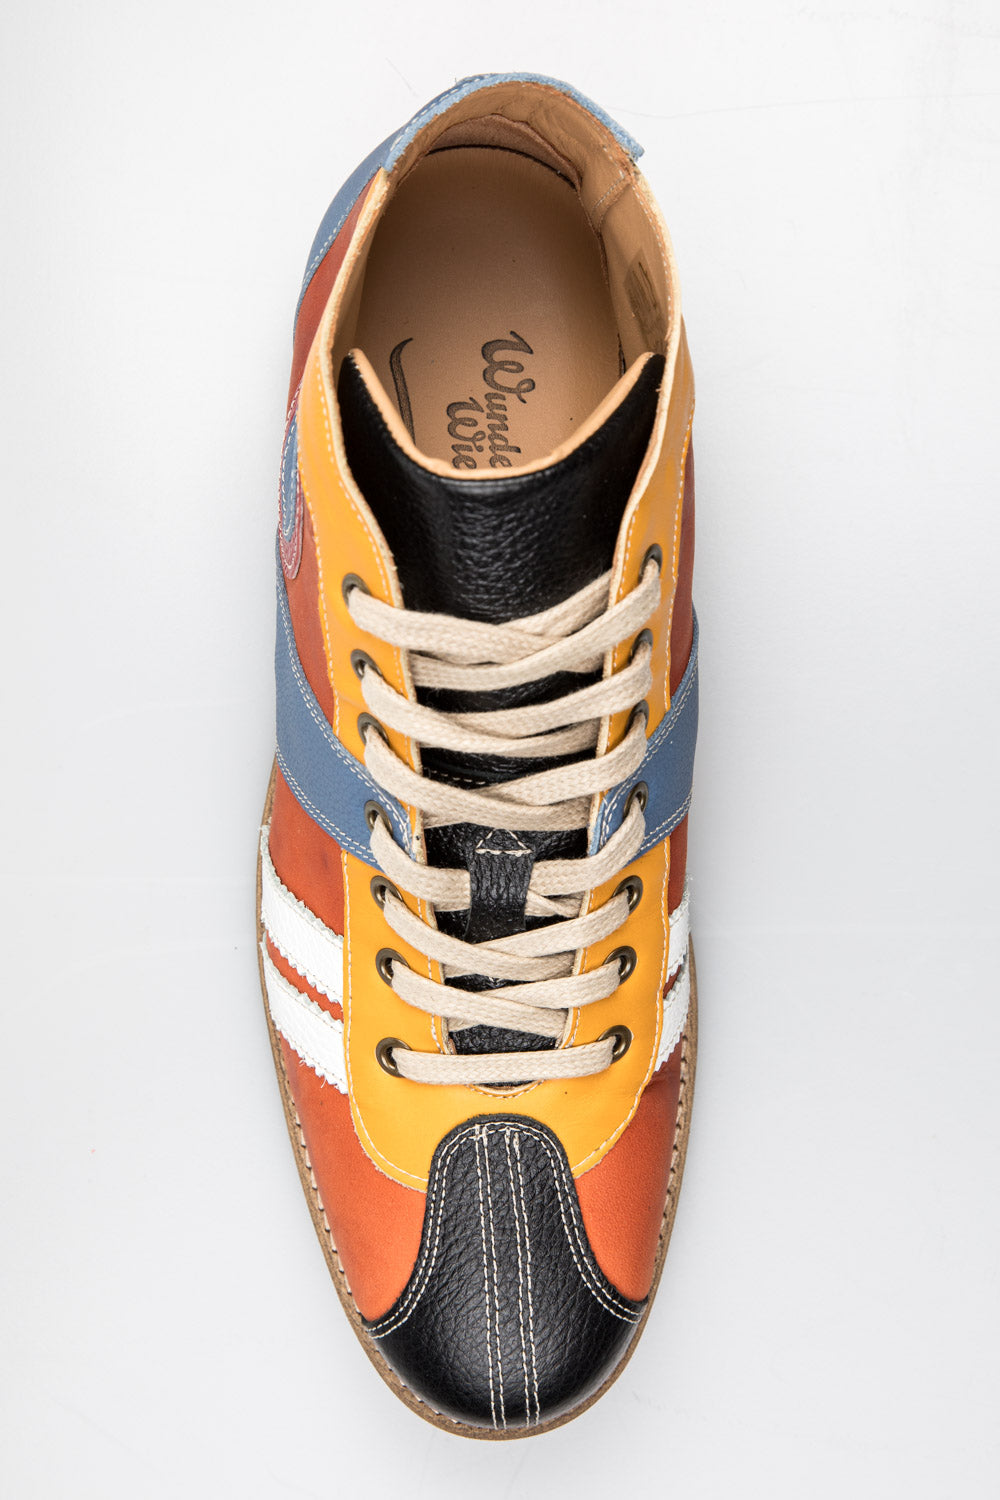 "The Racer" Retro Leder Sneaker hellblau-orange-rot-gelb-schwarz-weiß